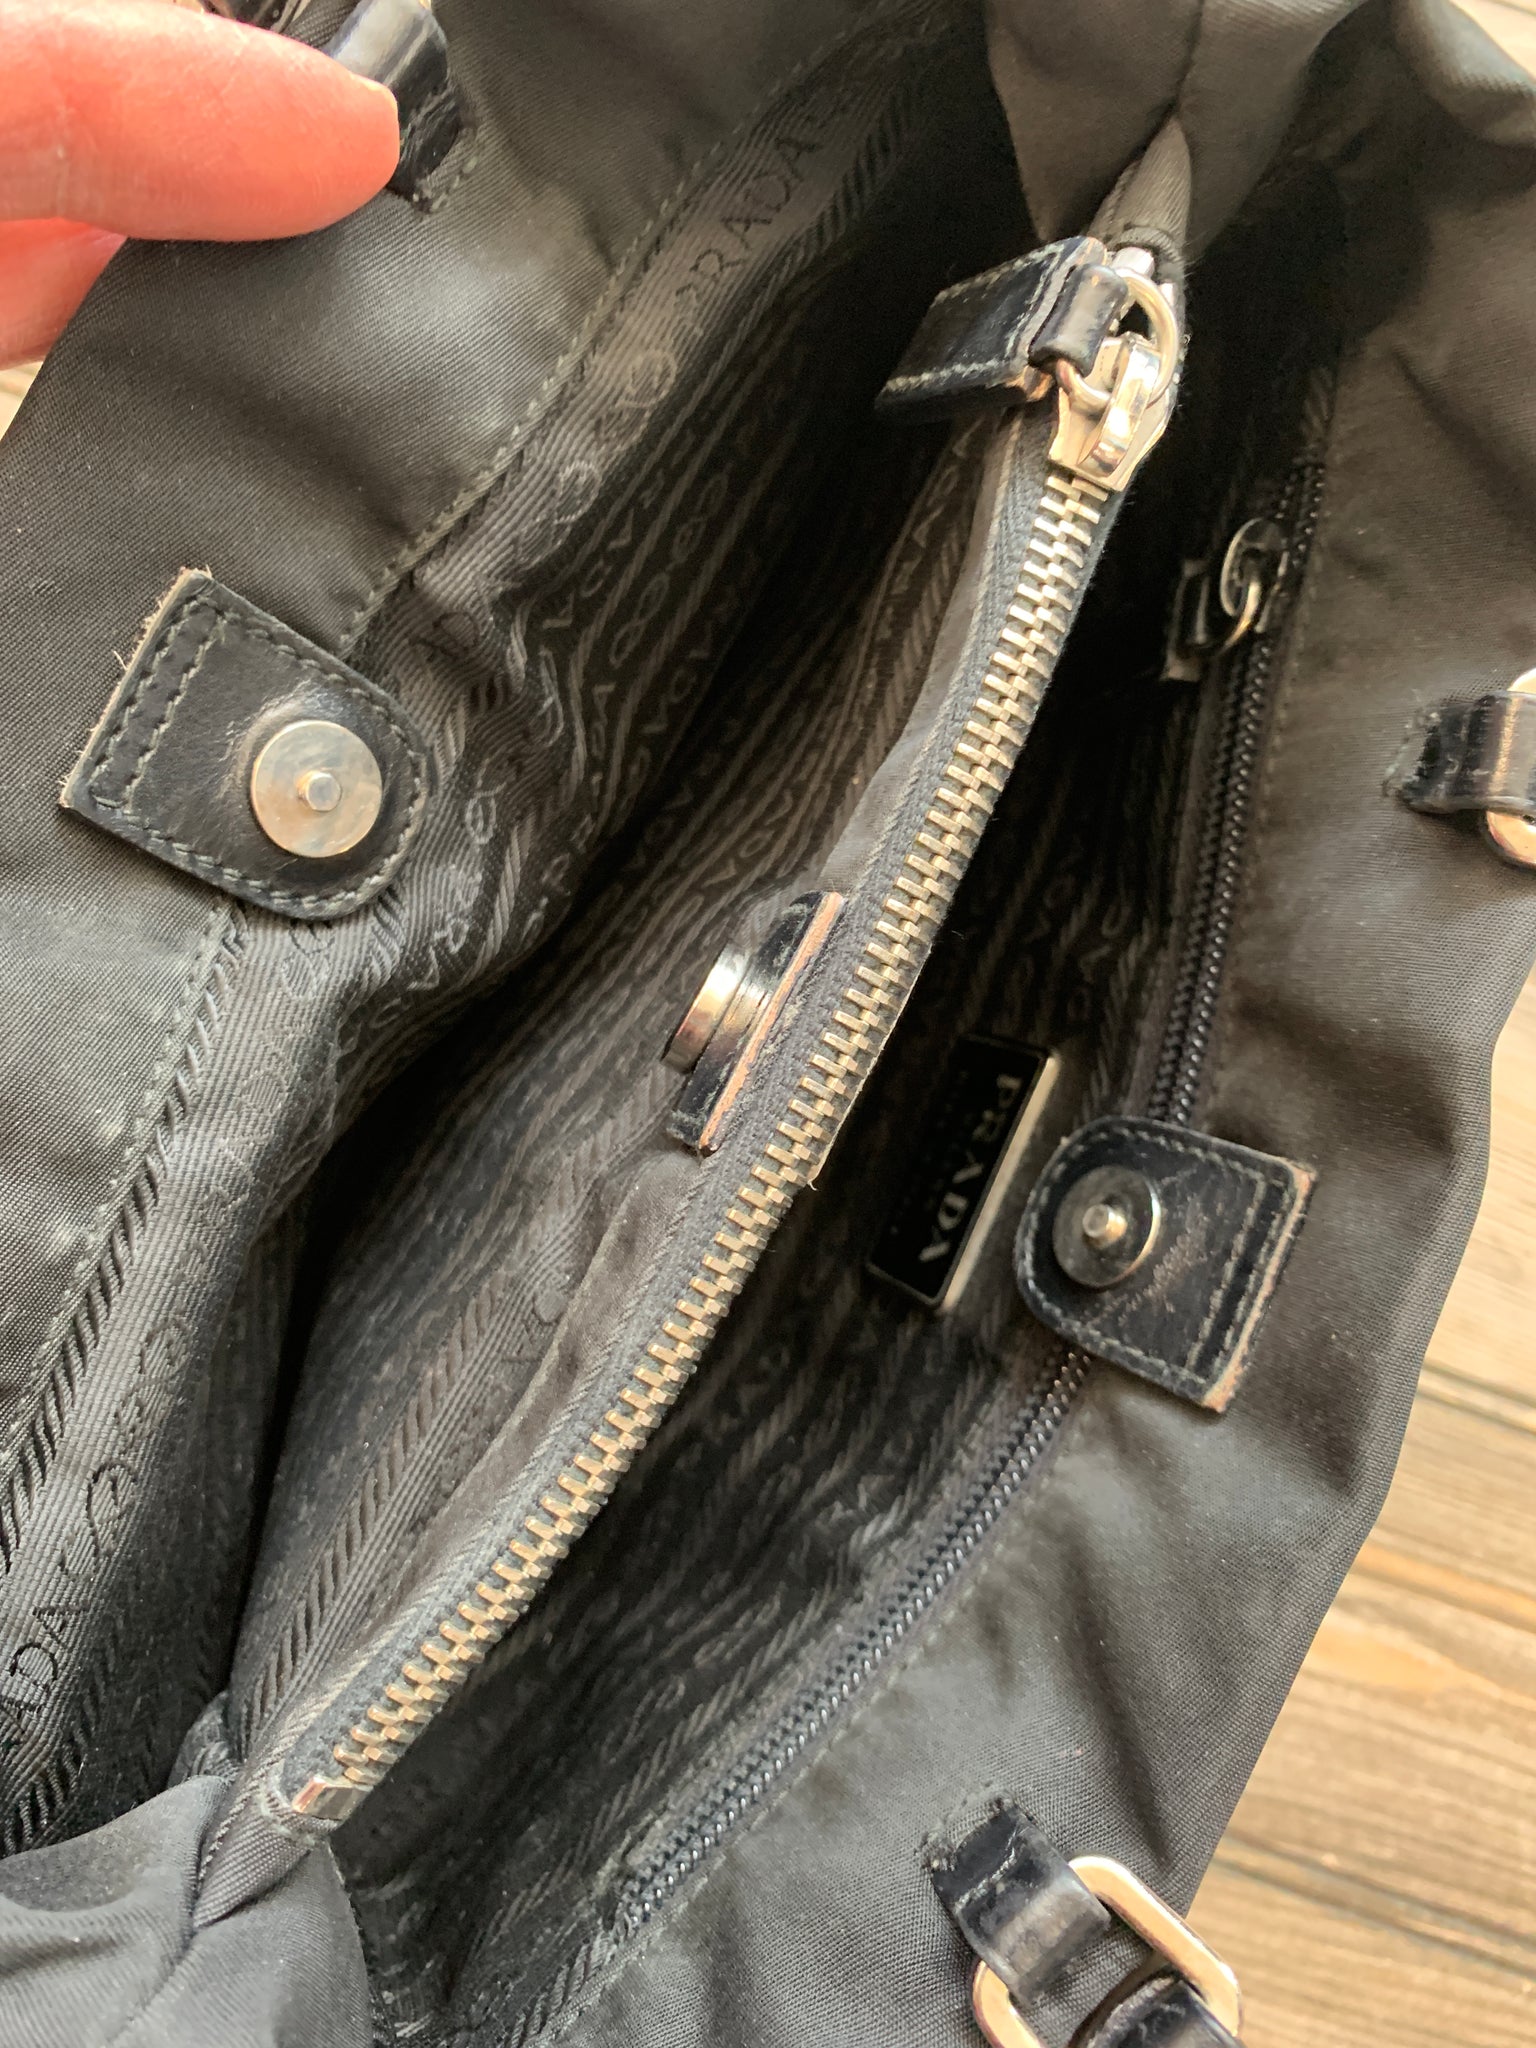 Prada Nylon Shoulder Bag Black Handbag